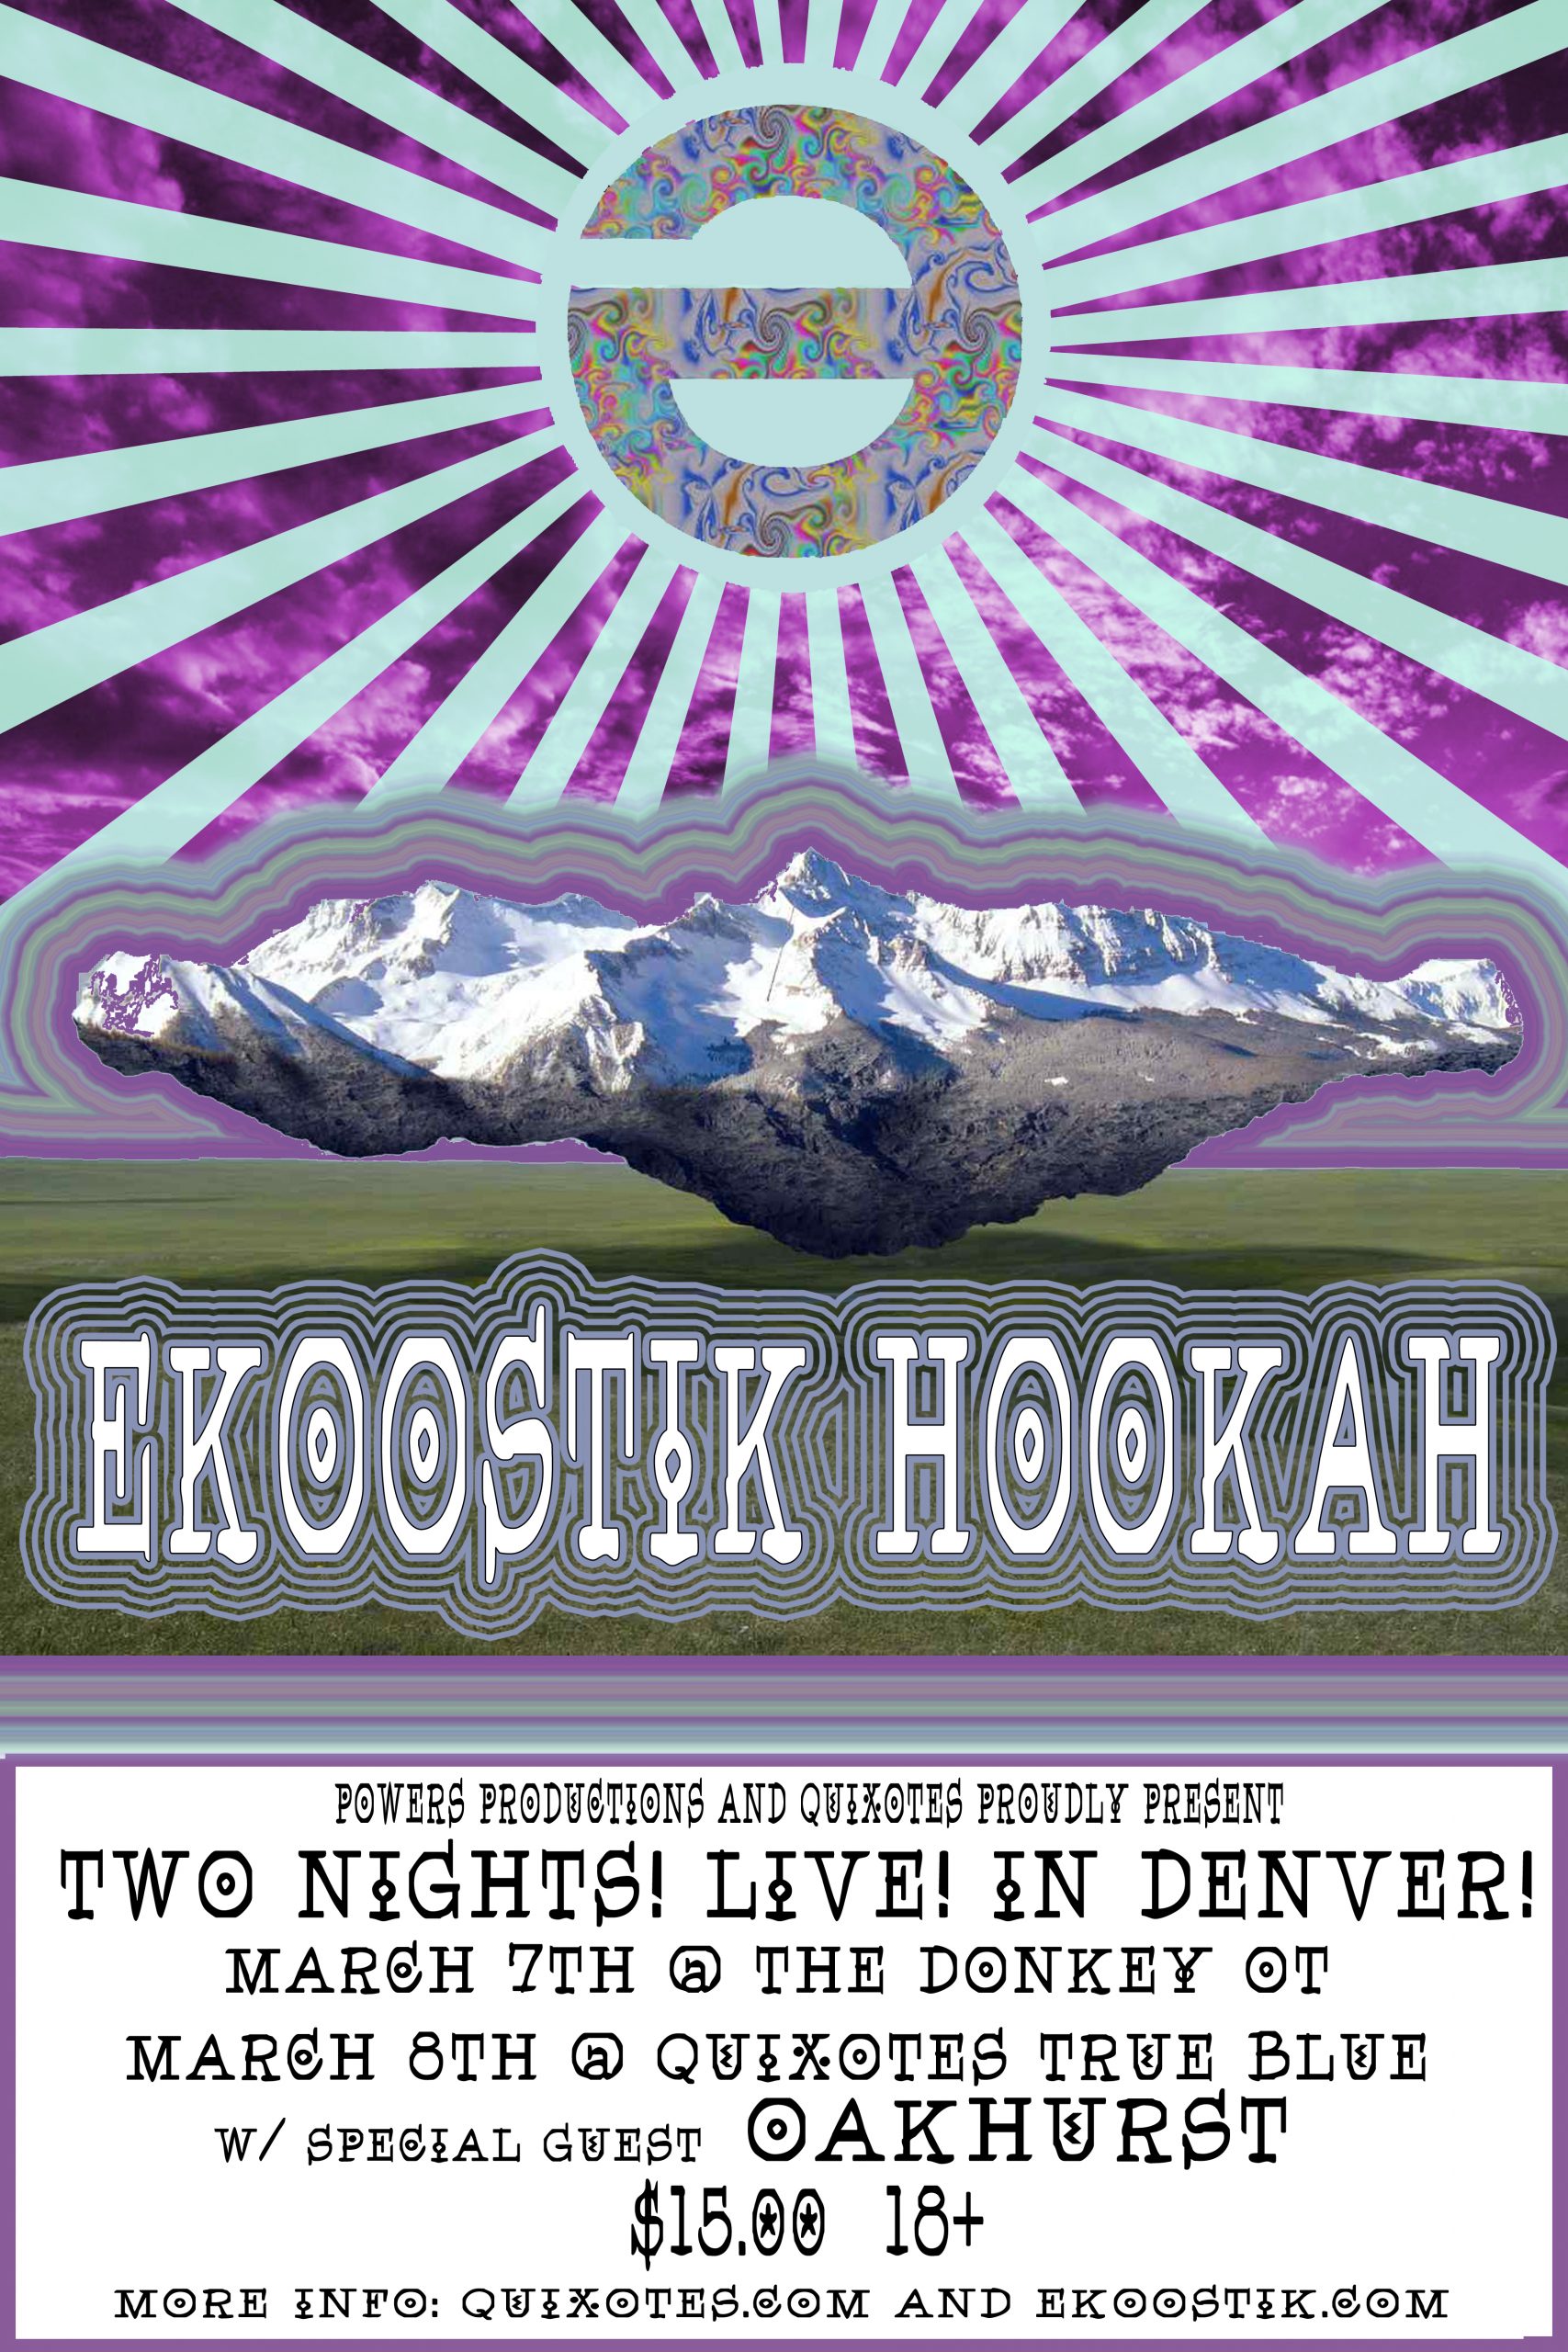 ekoostik hookah Announces Colorado tour and return to JAMmaica